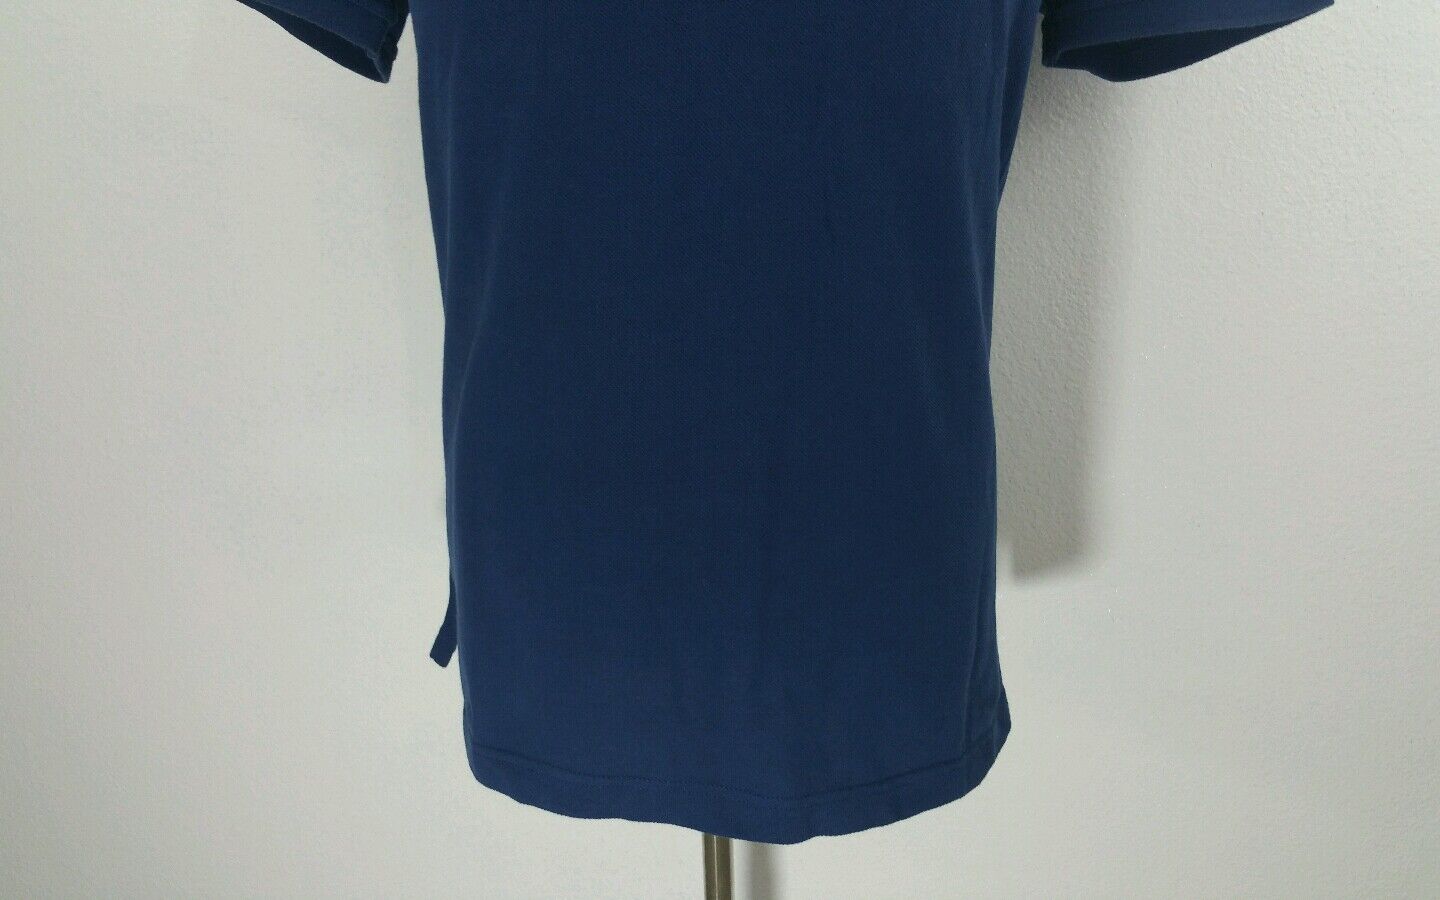 TOM TAILOR Polo Shirt Men's Short Sleeve WAVE RIDER blue sz XLARGE | eBay